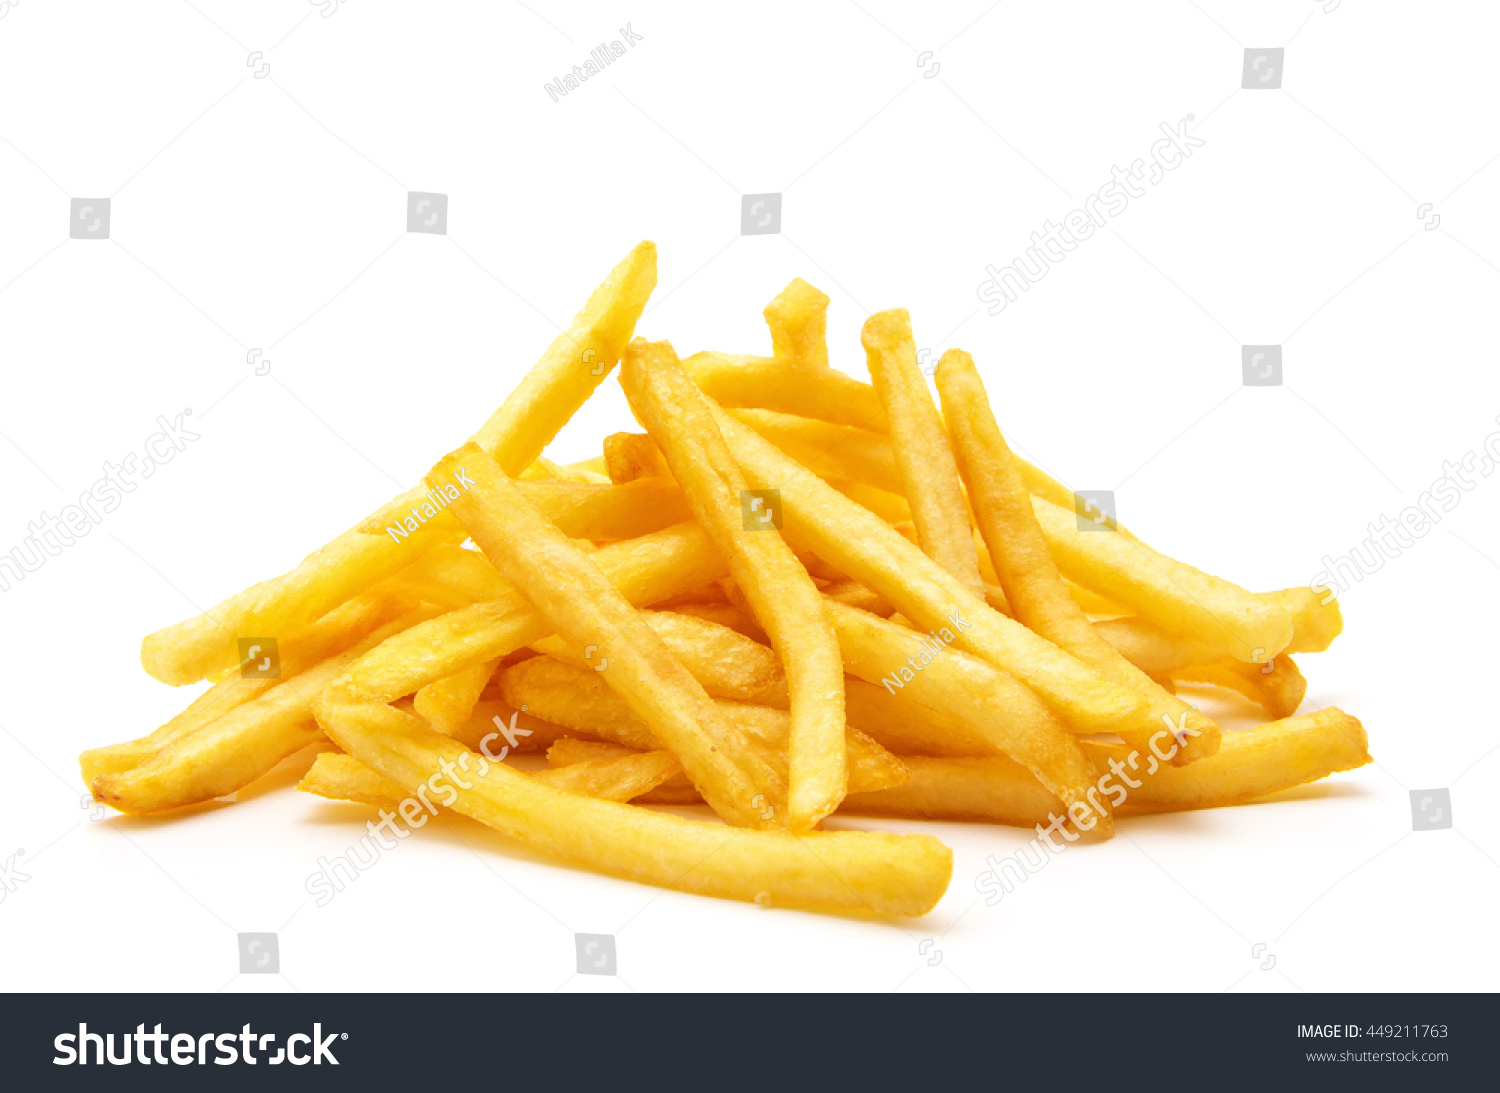 potato fry on white isolated background #449211763